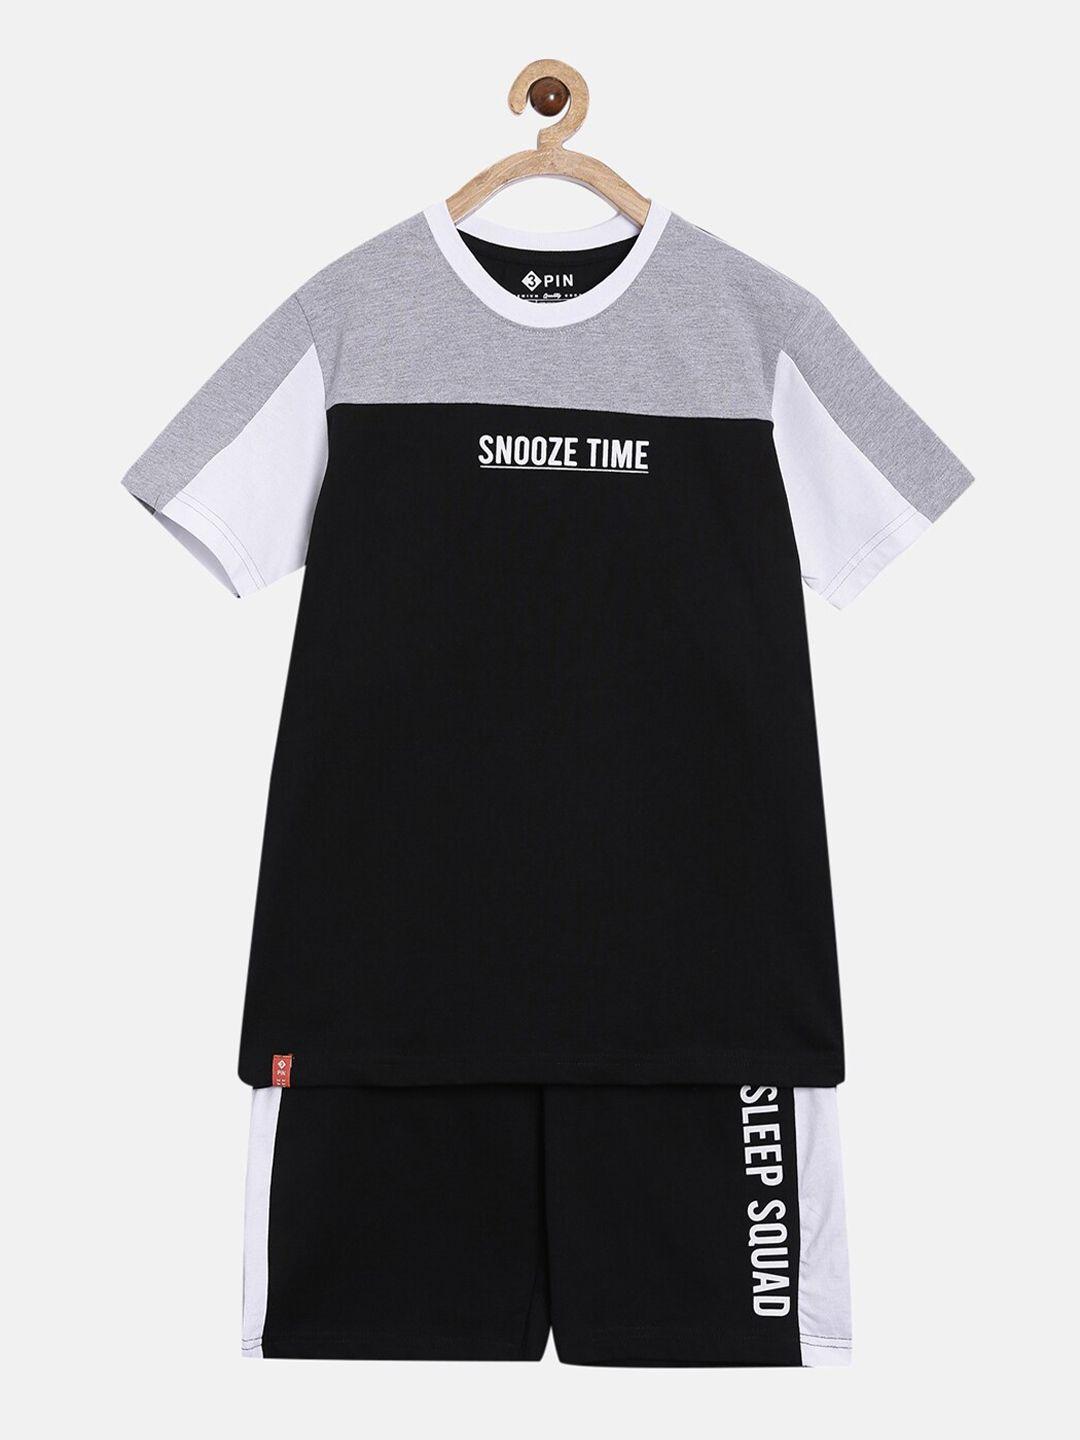 3pin boys black & grey colourblocked t-shirt & shorts